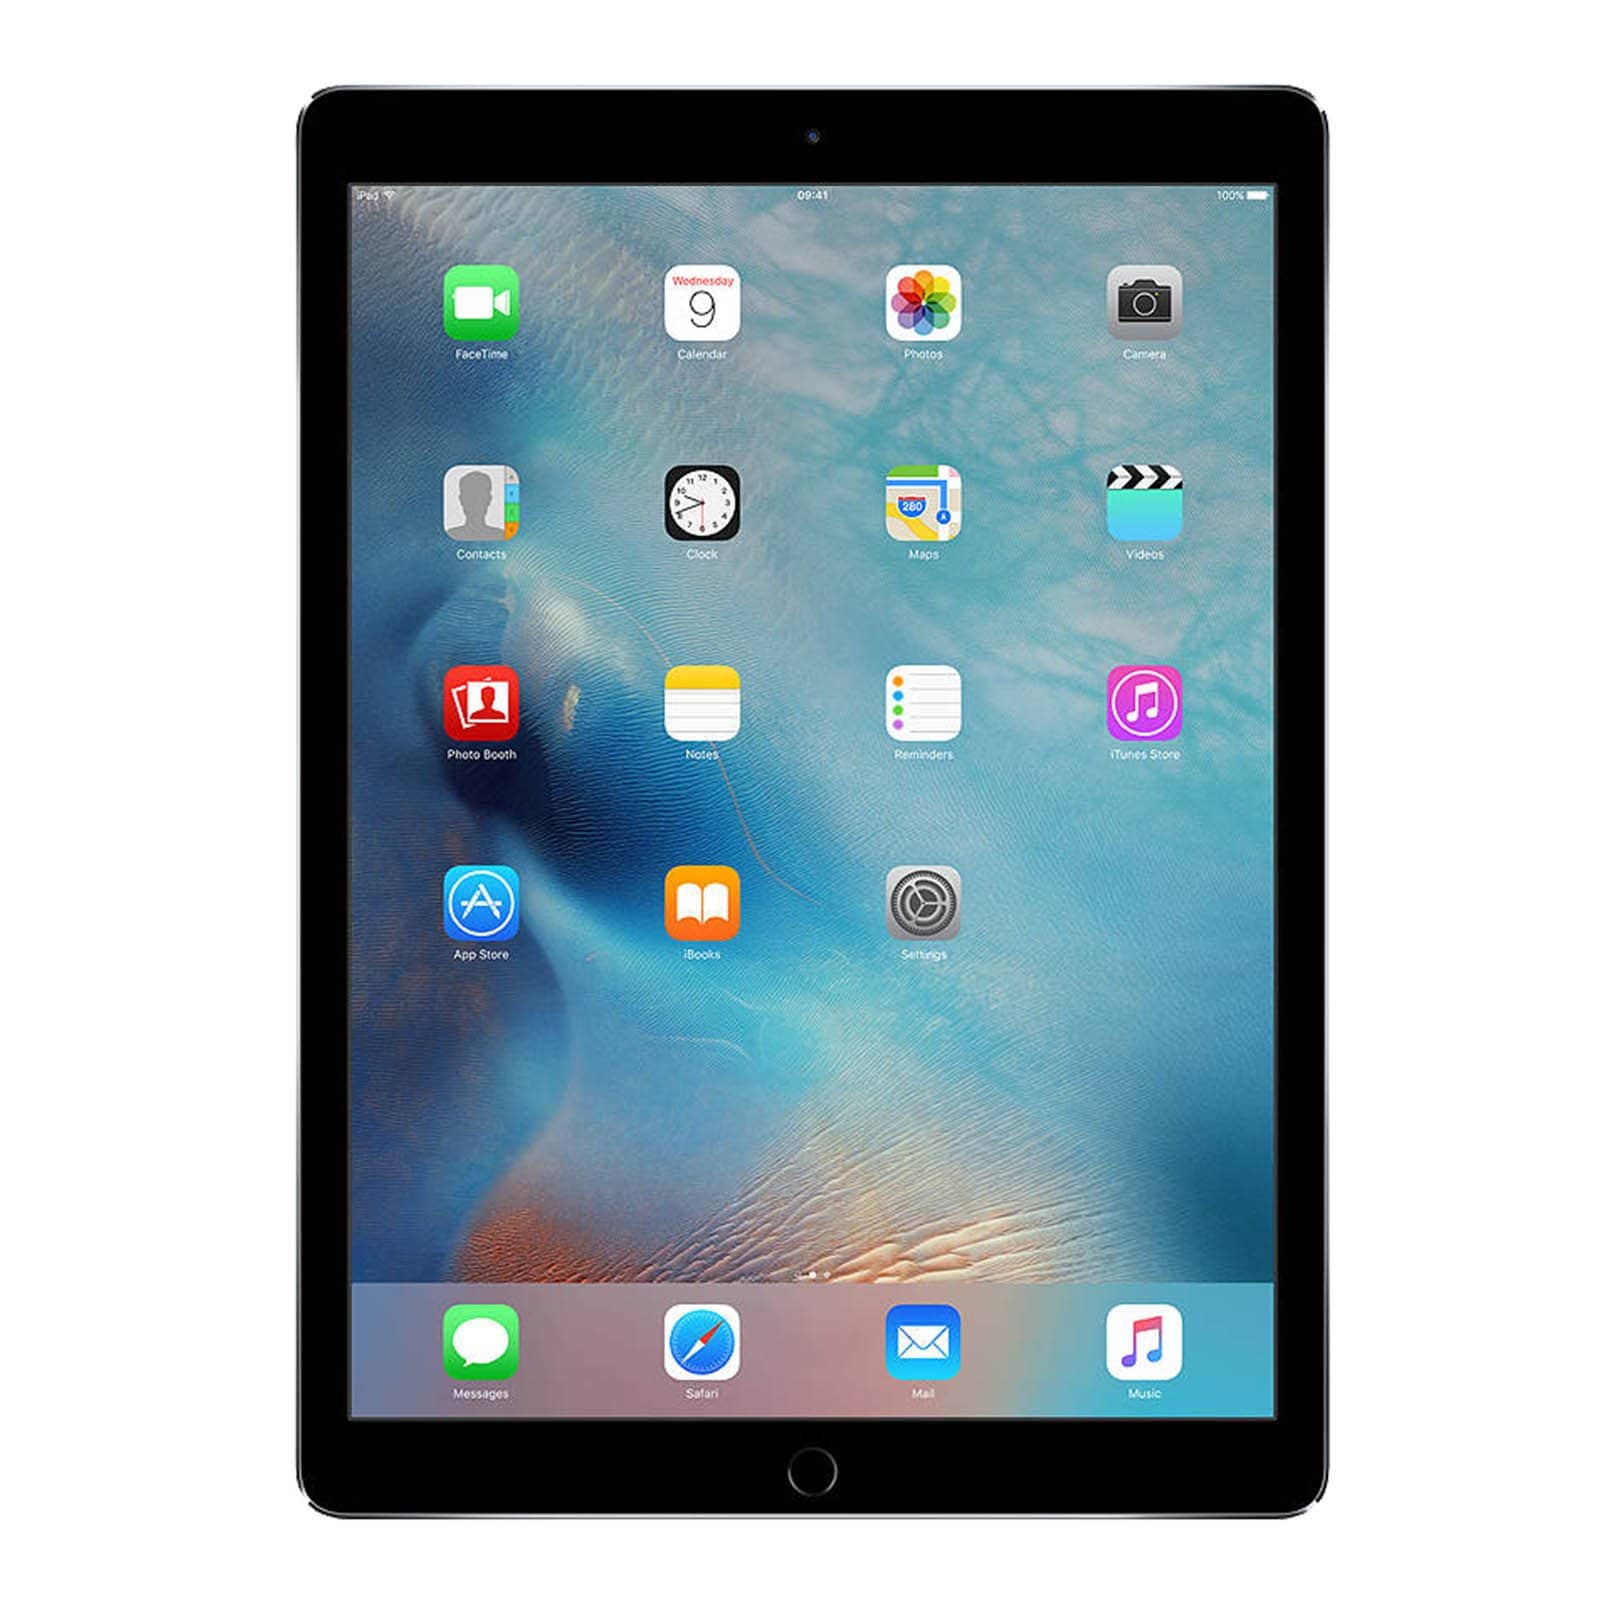 iPad Pro 12.9 Inch 2nd Gen 256GB Space Grey Pristine - Unlocked